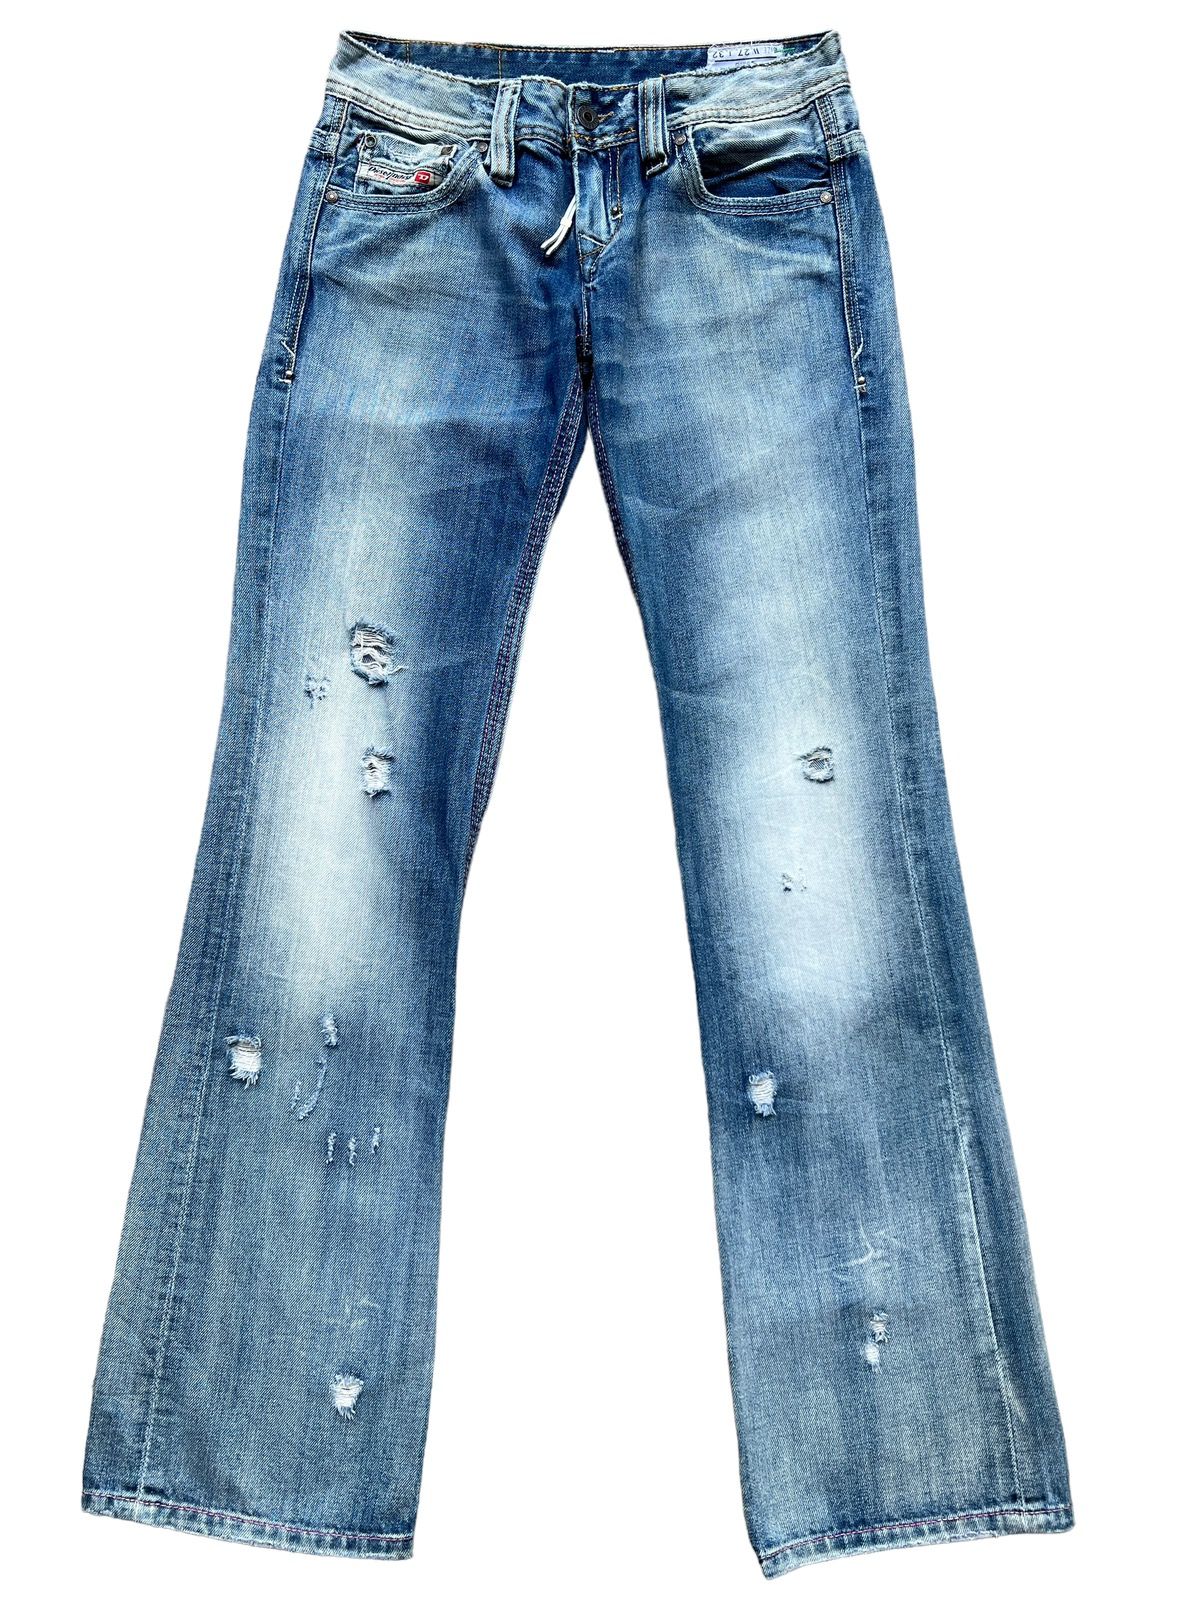 Vintage Diesel Leather Distressed Flare Lowrise Jeans 30x33 - 2